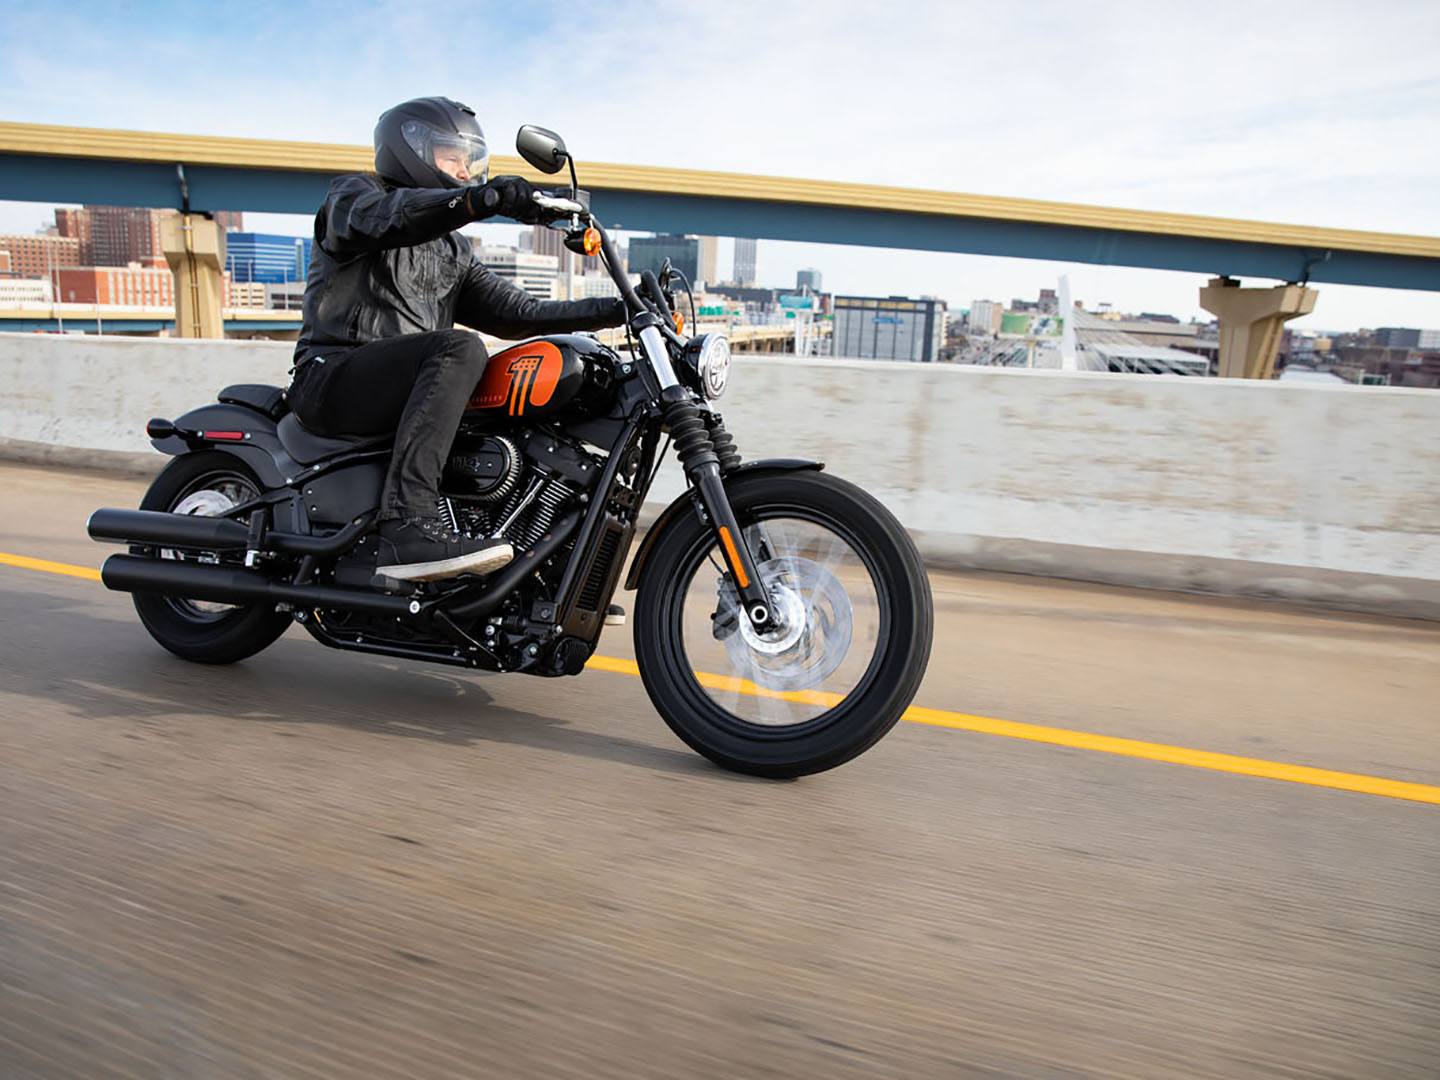 2021 Harley-Davidson Street Bob® 114 in South Charleston, West Virginia - Photo 10